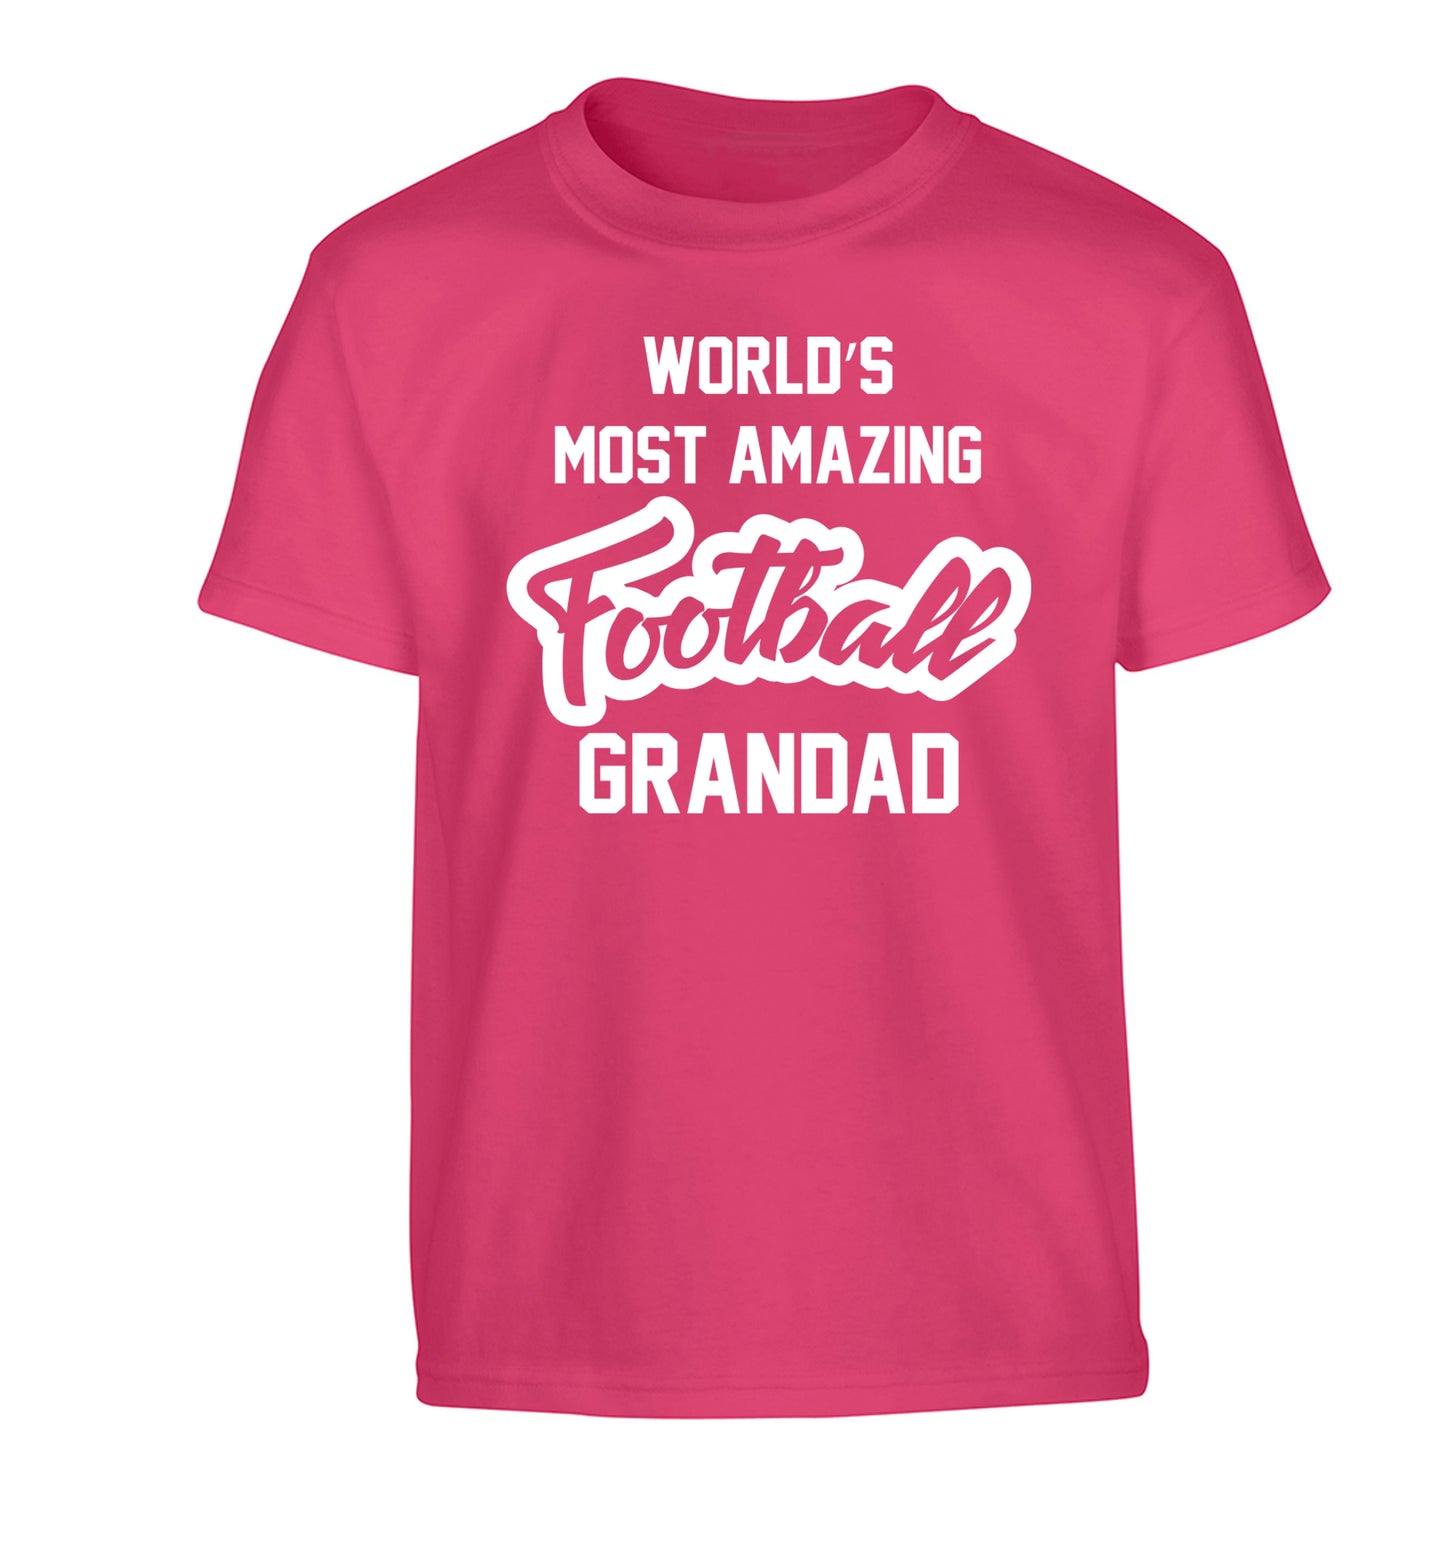 Worlds most amazing football grandad Children's pink Tshirt 12-14 Years